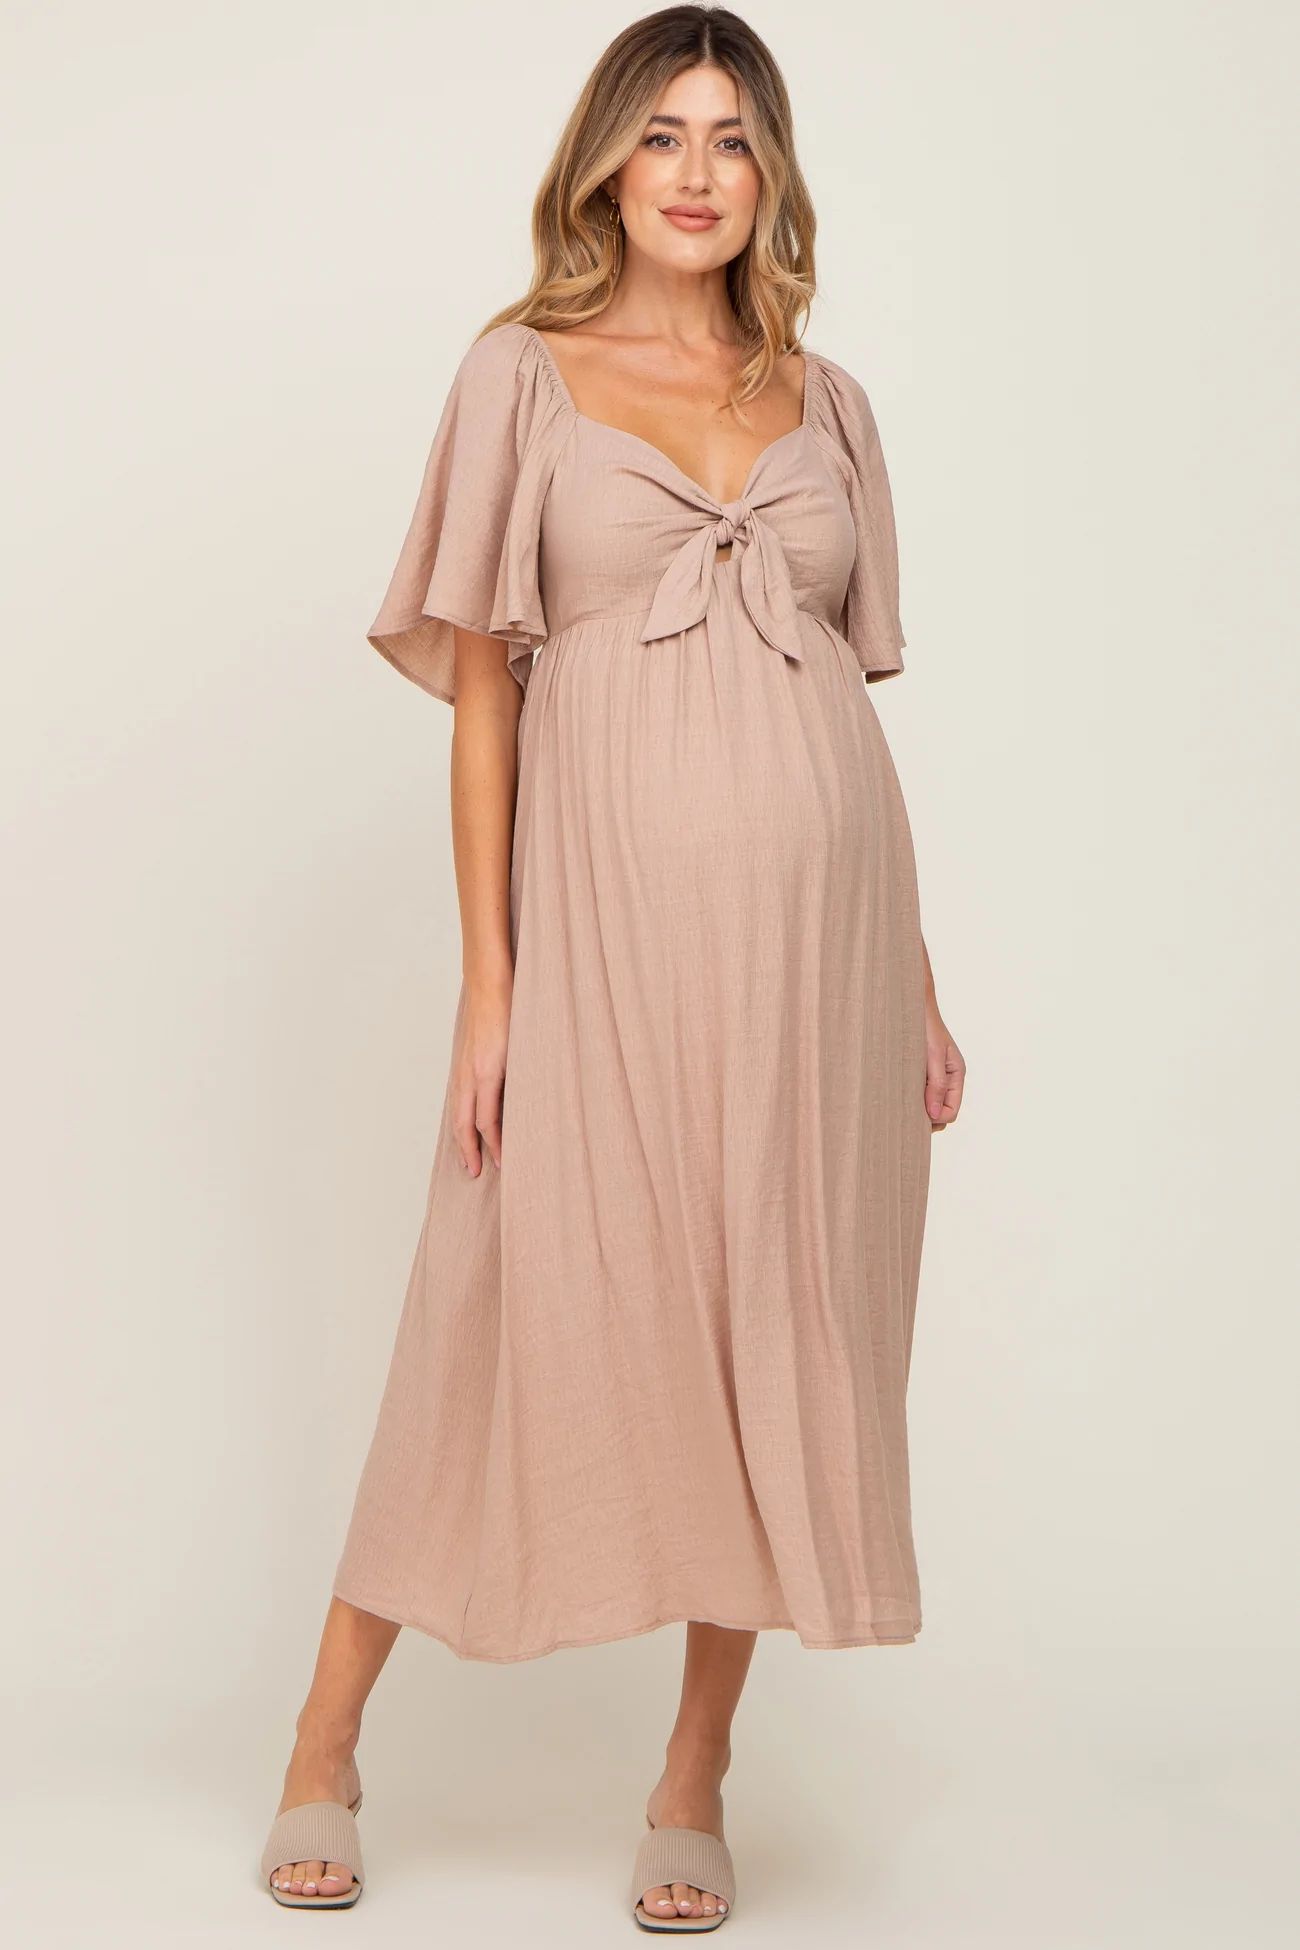 Mocha Front Tie Ruffle Sleeve Maternity Midi Dress | PinkBlush Maternity